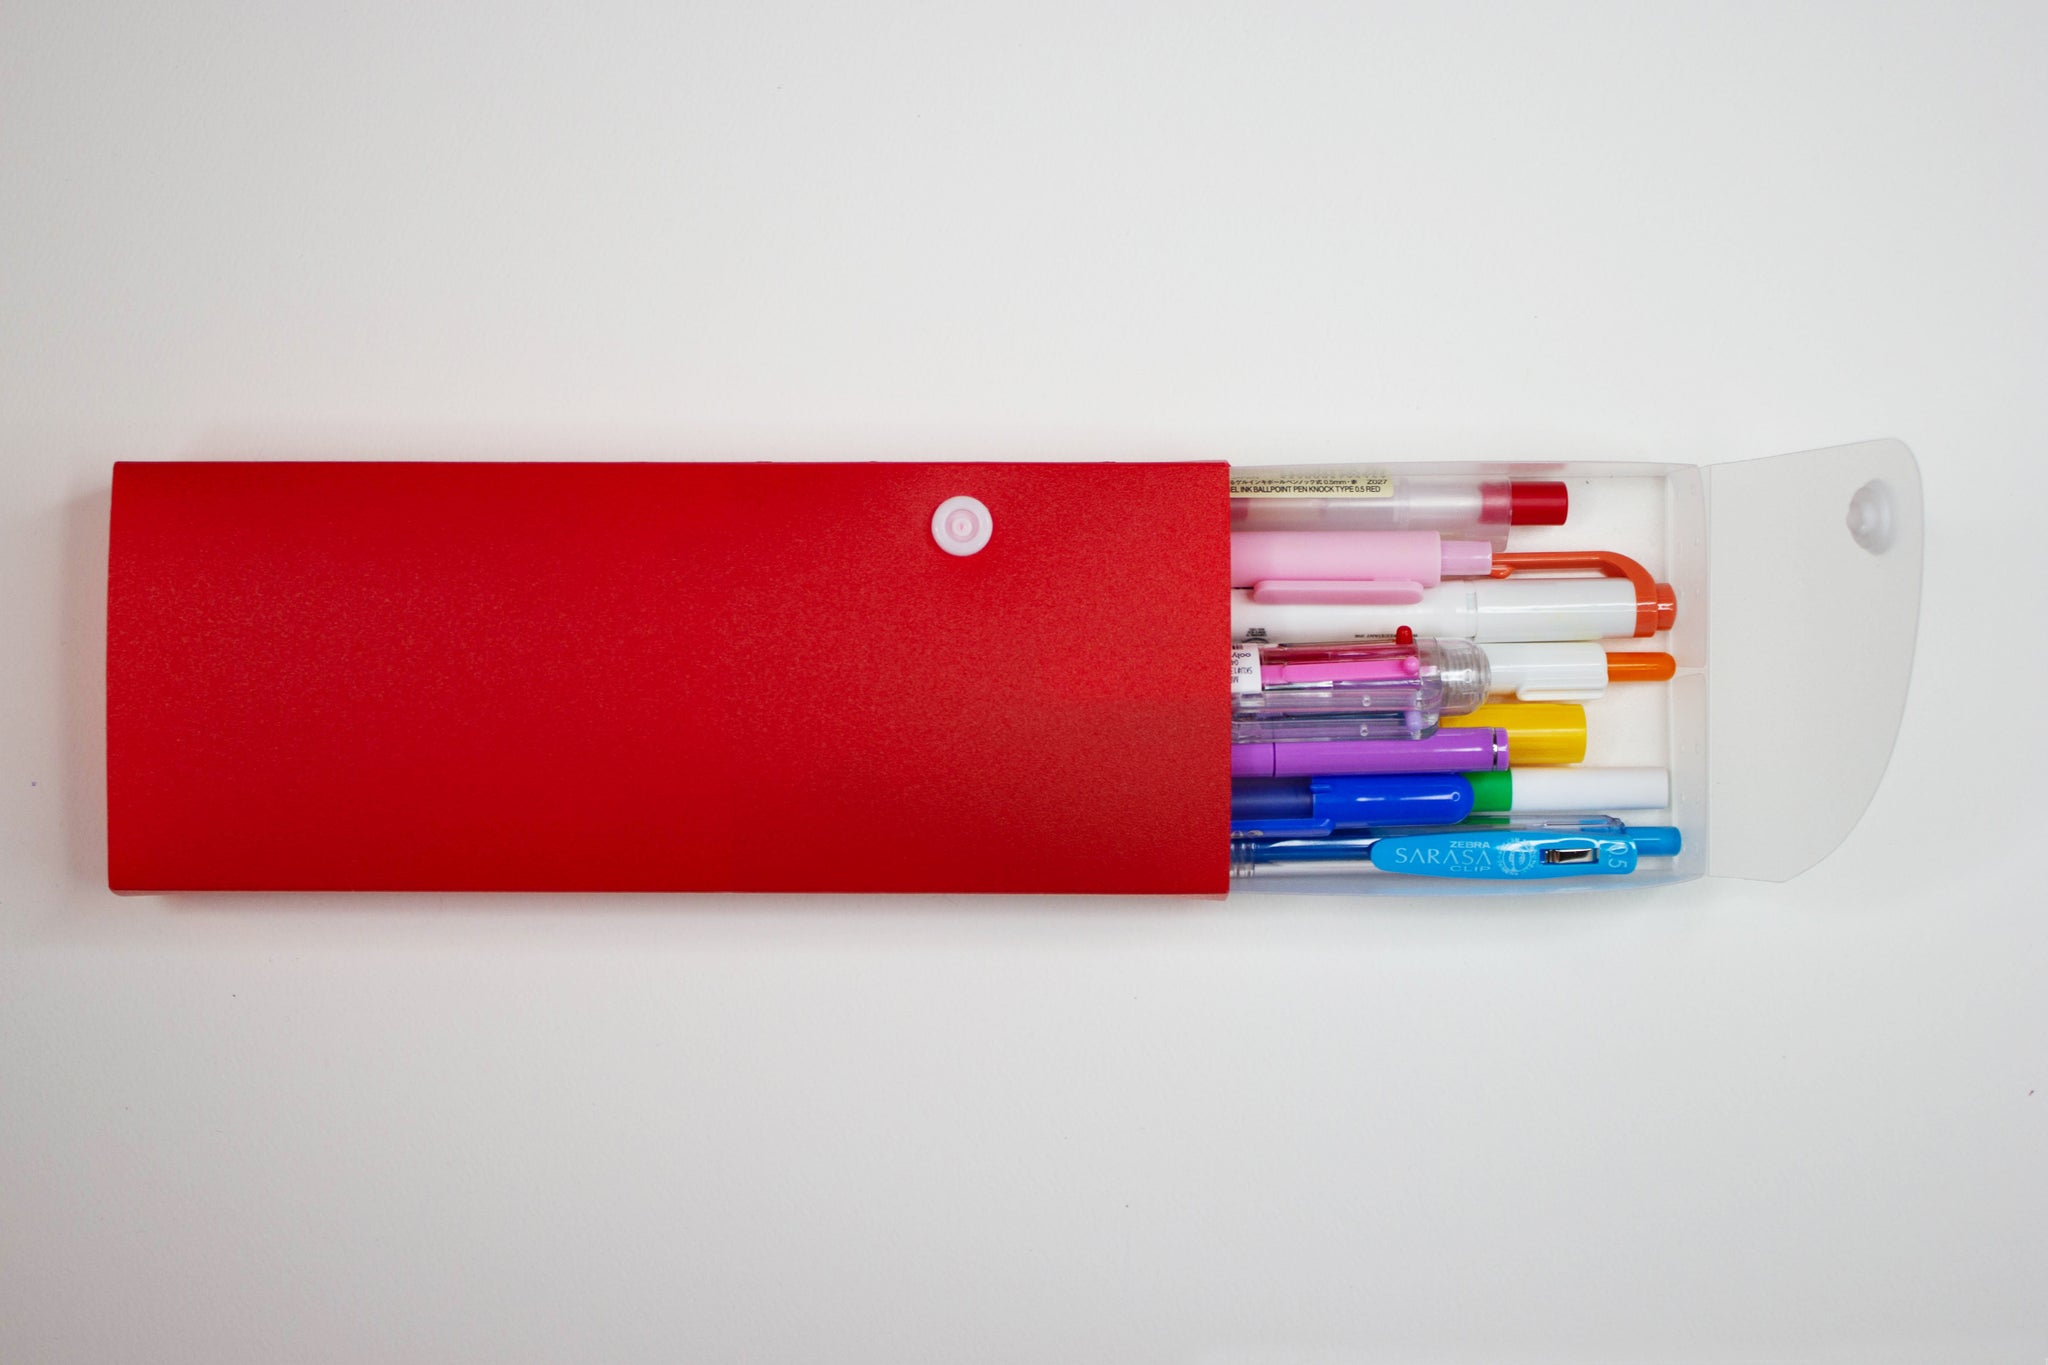 Red Pen Sampler Set